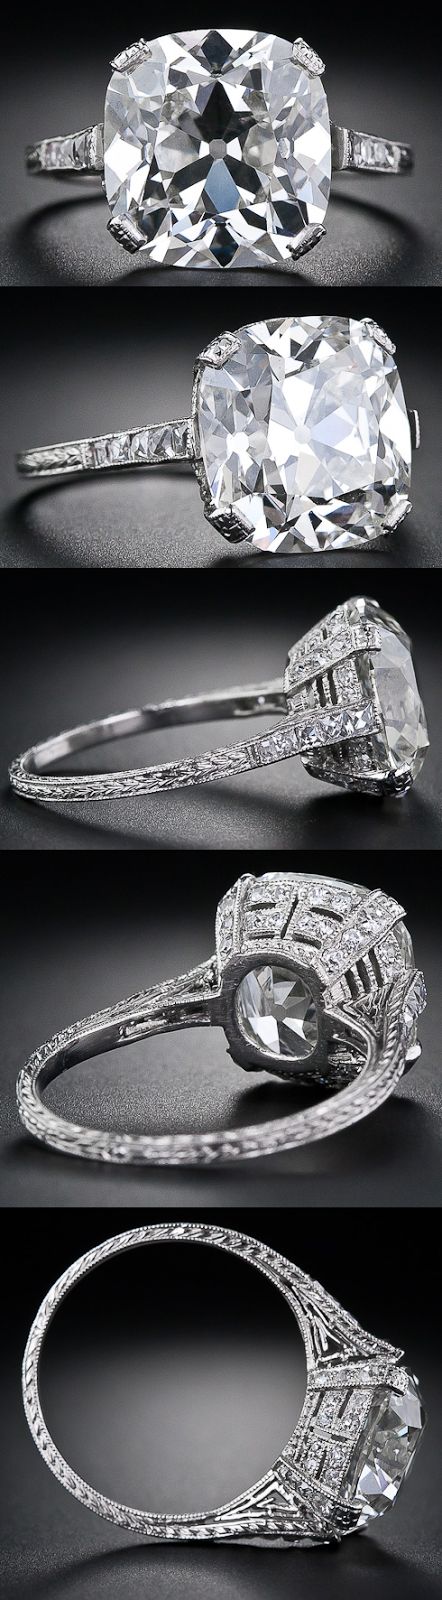 #engagement #ring #styles carat antique cushion cut diamond ring.